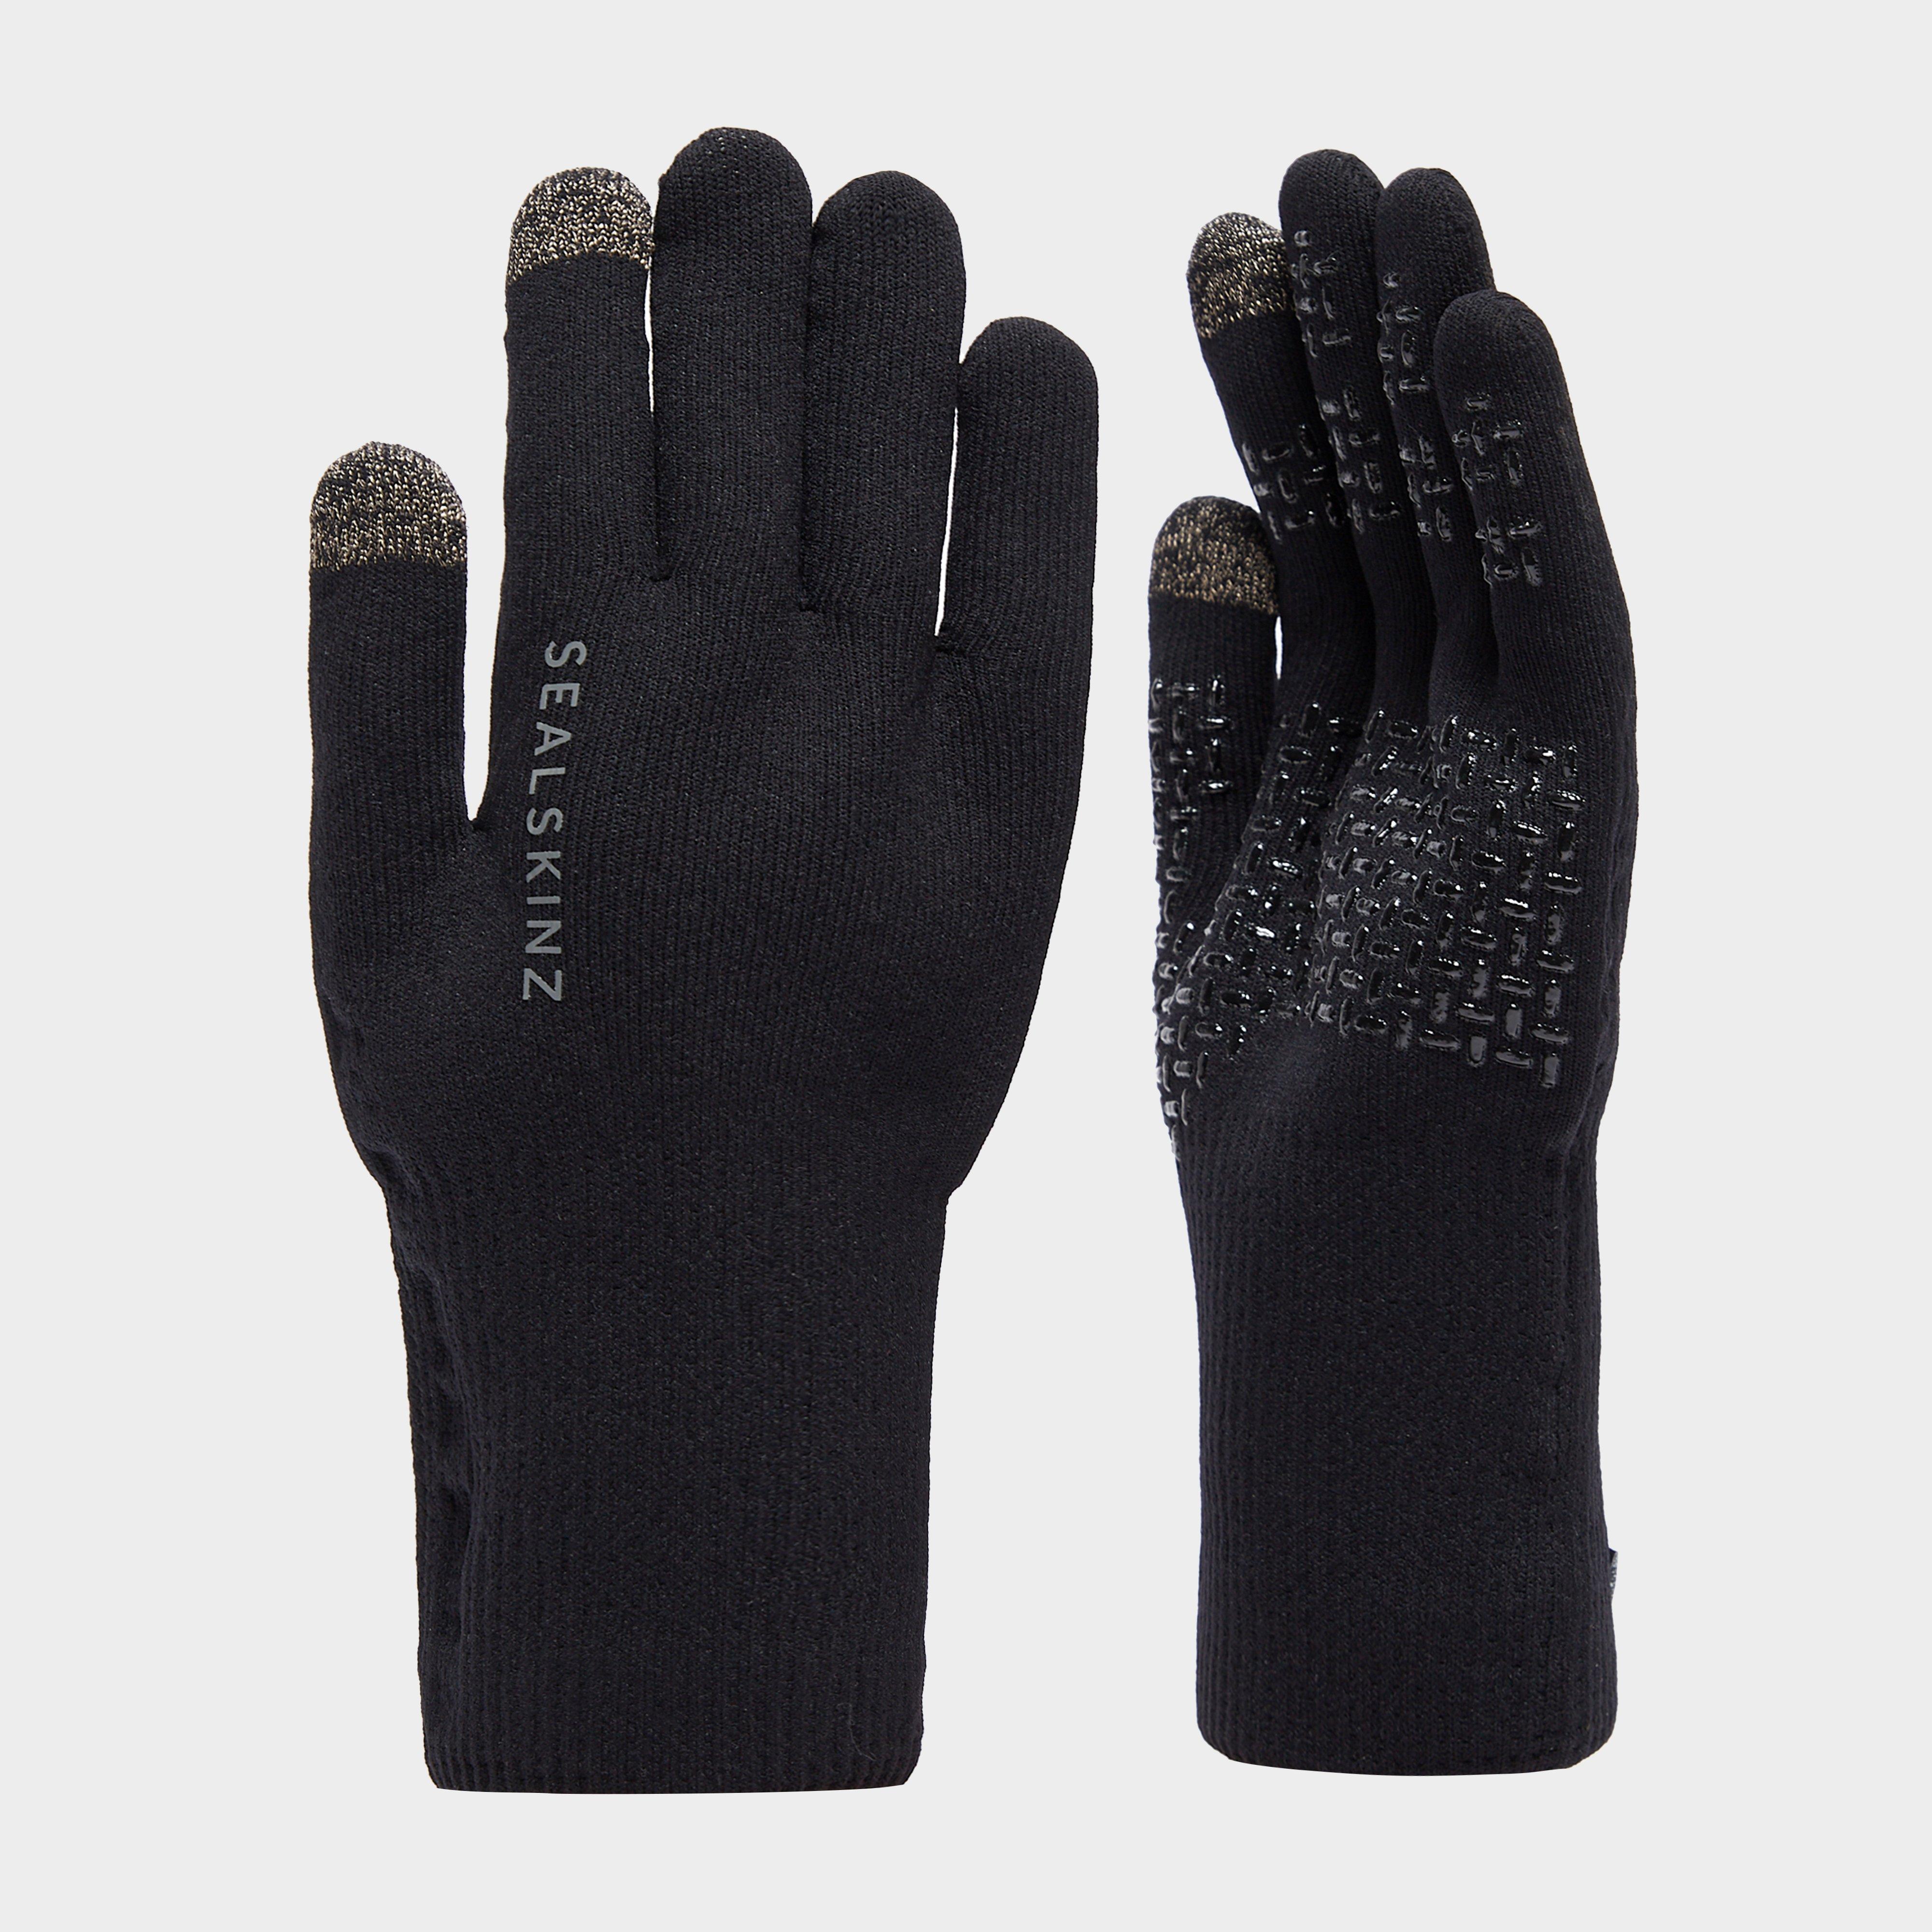 SealSkinz Sealskinz Waterproof All Weather Ultra Grip Glove - Black, Black